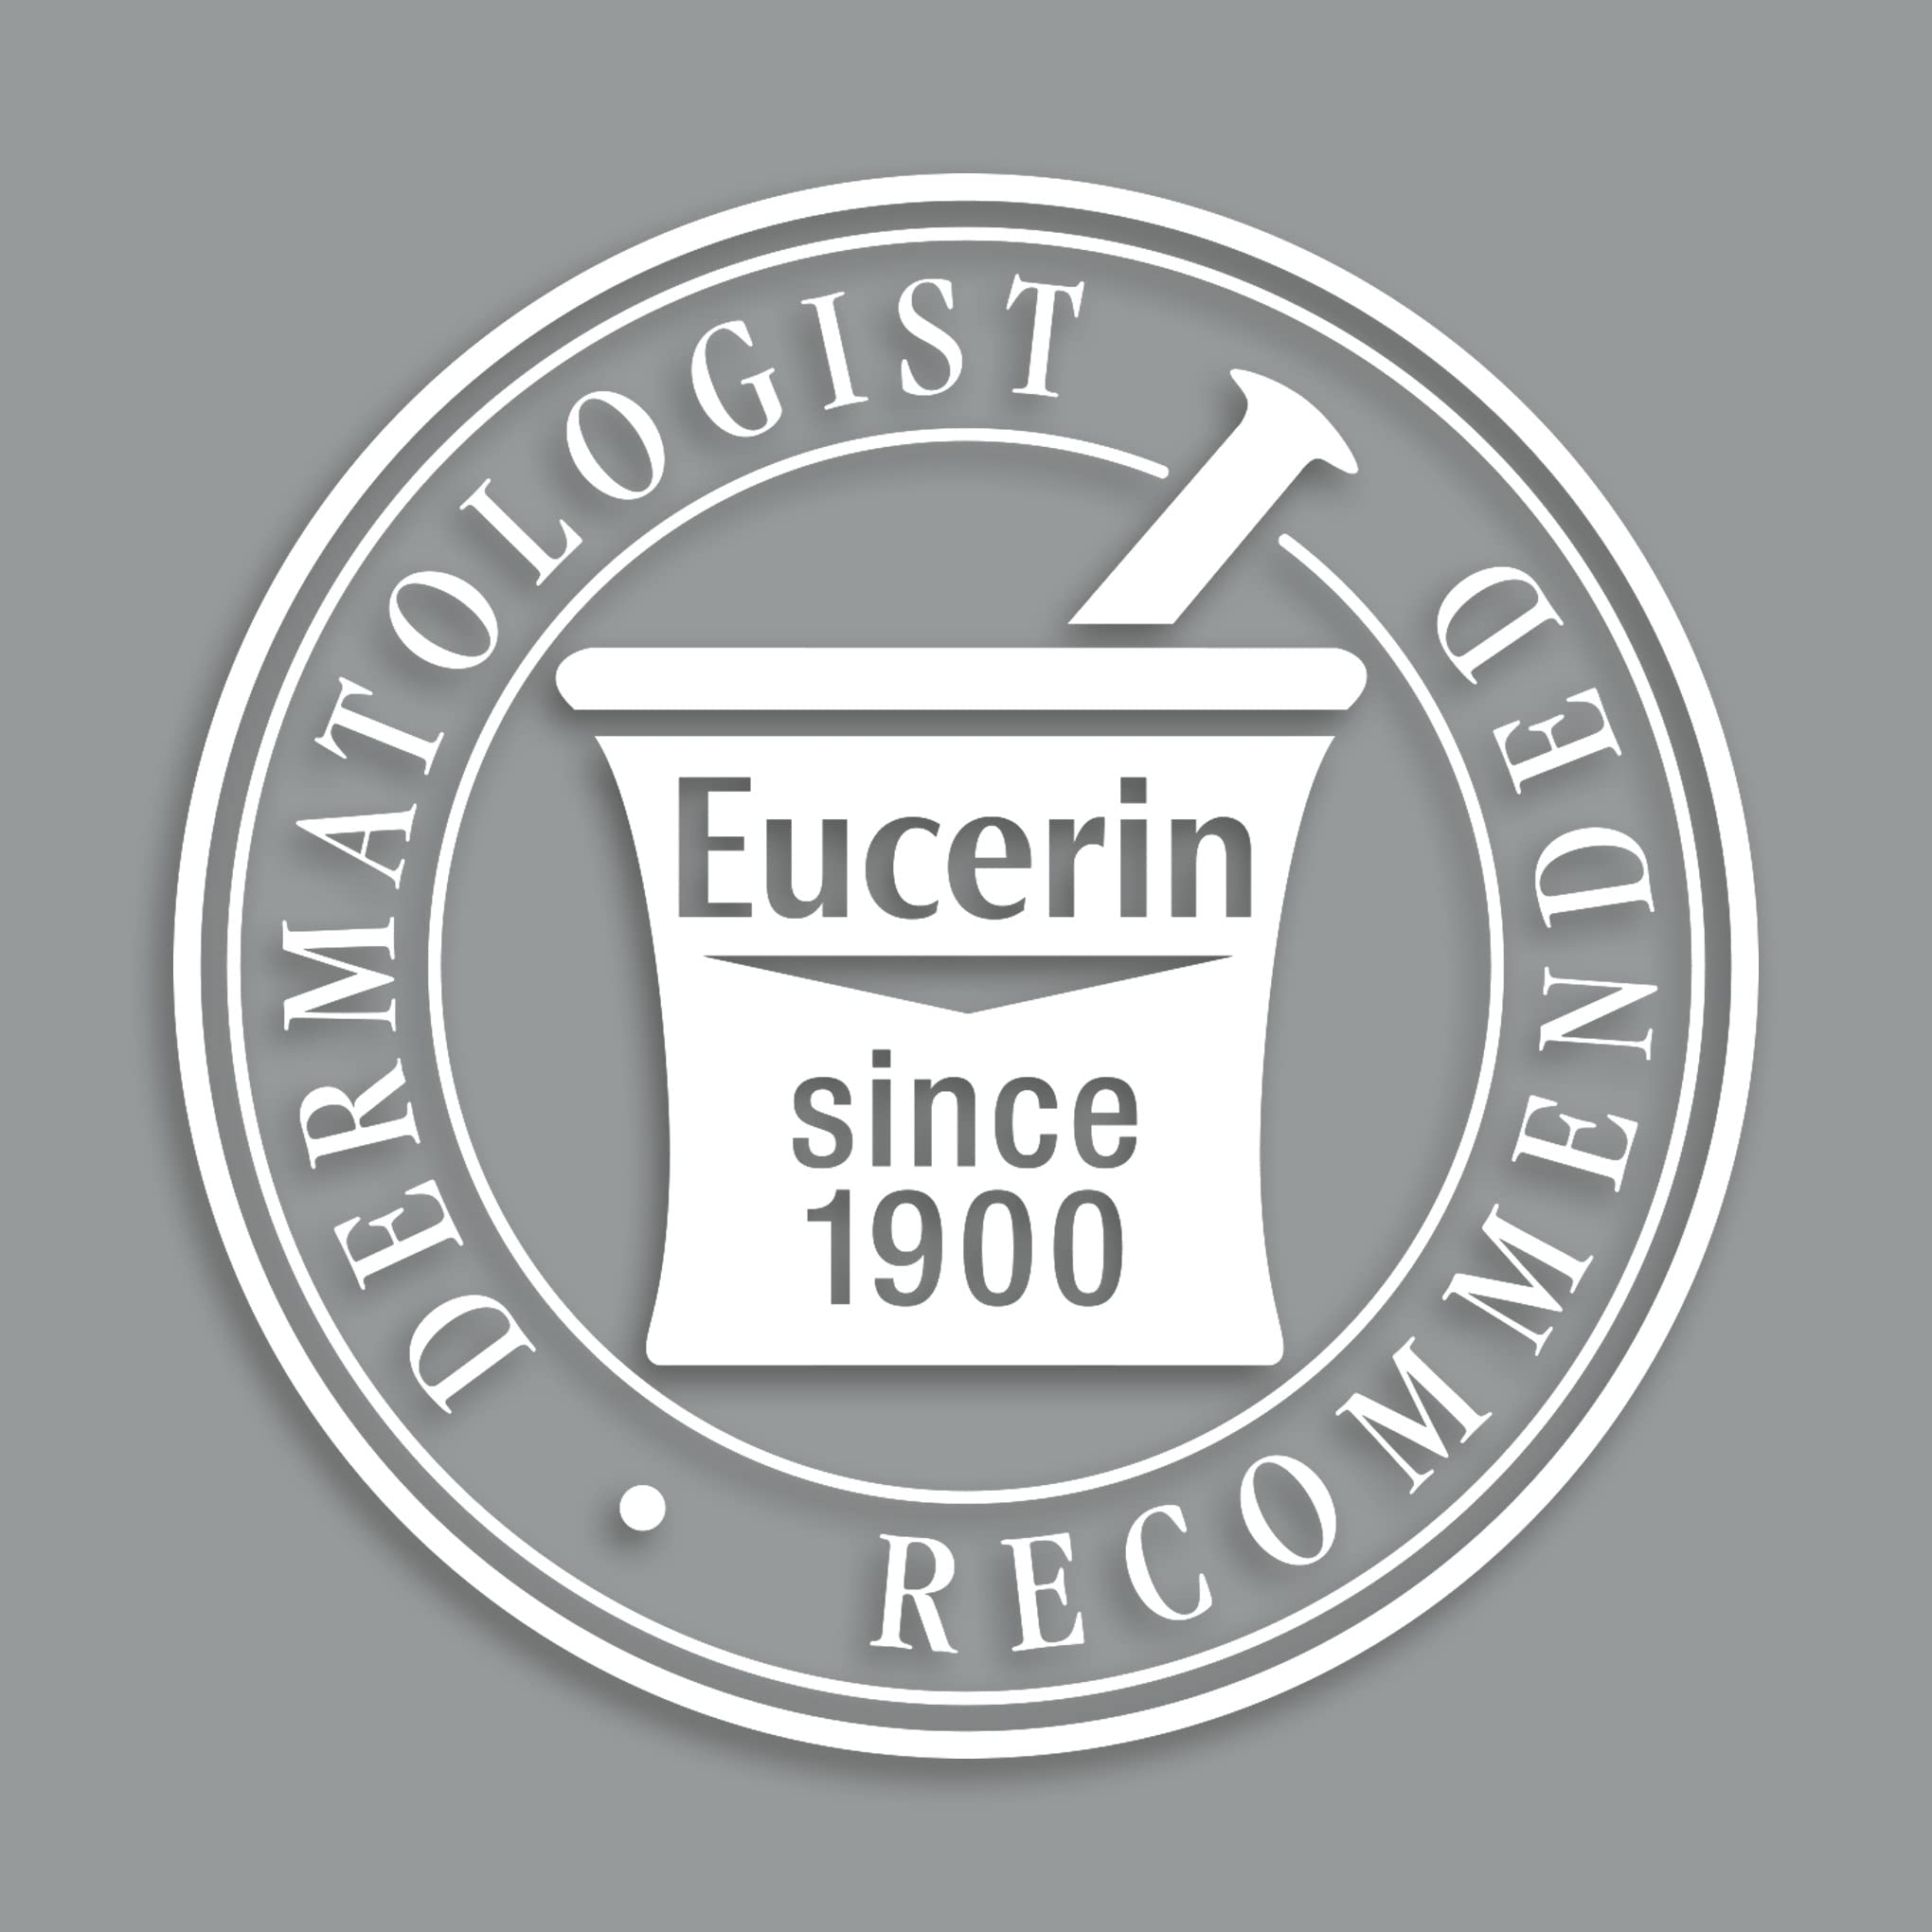 Eucerin Original Healing Rich Body Lotion, Body Lotion for Dry Skin, 16.9 Fl Oz Pump Bottle